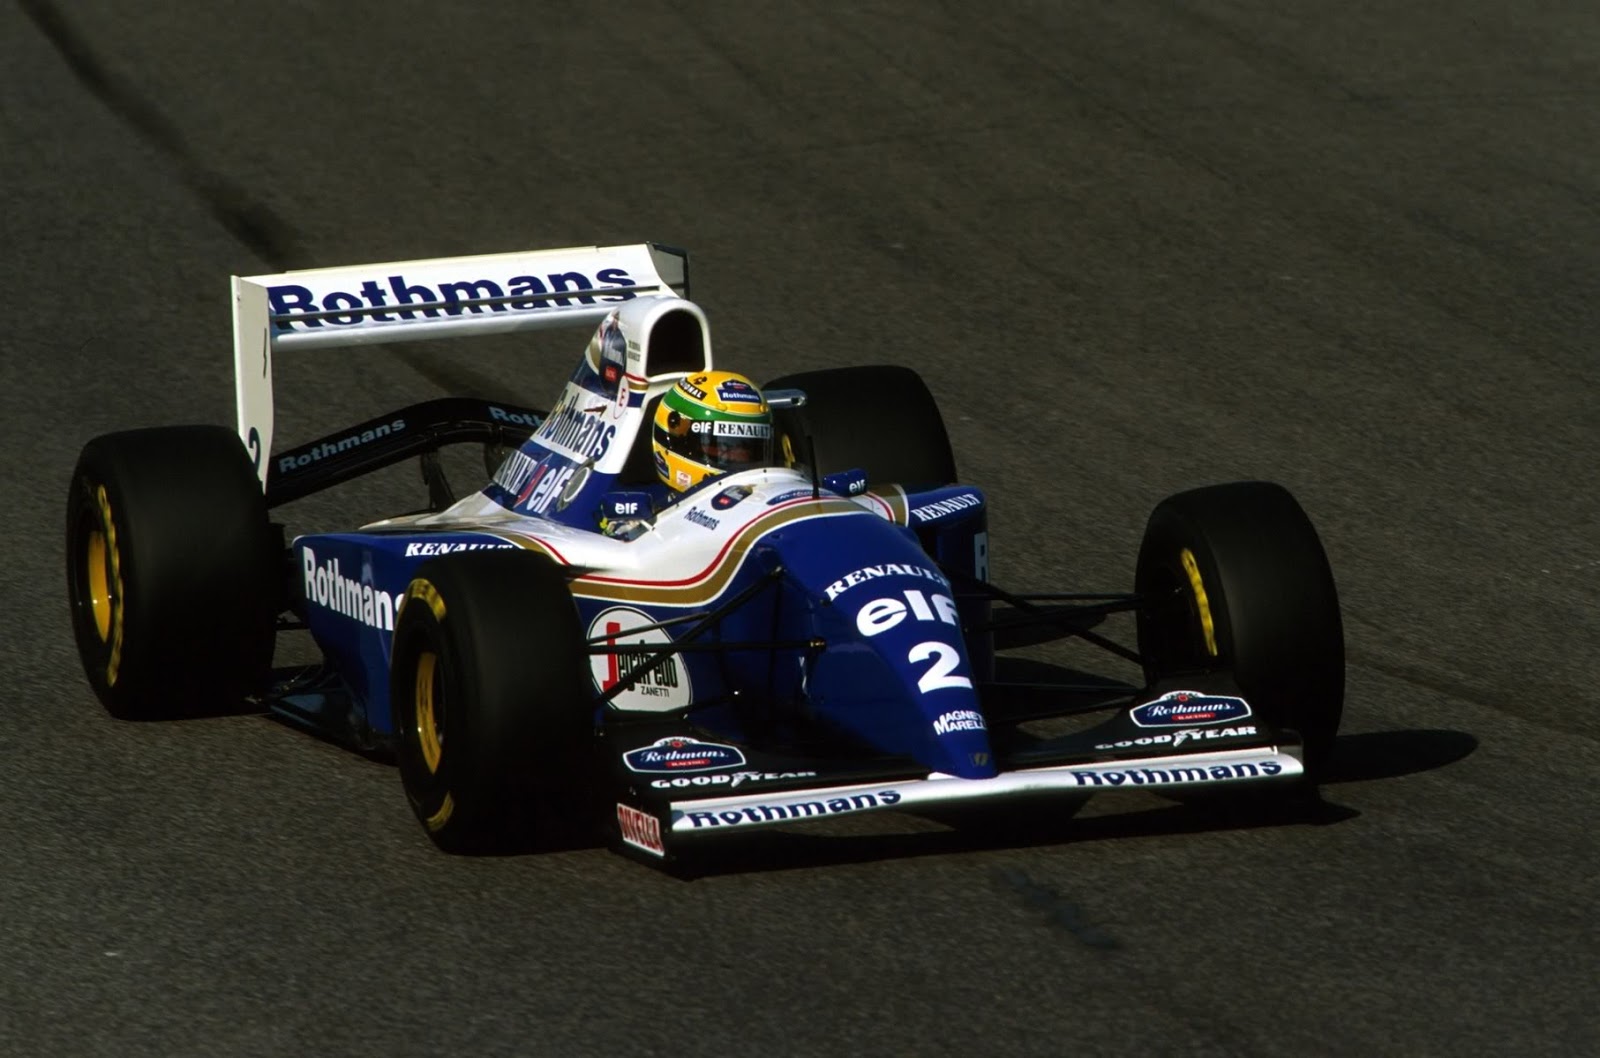 Motorsport Modeller: Williams FW16 1994 - The Tragic Car